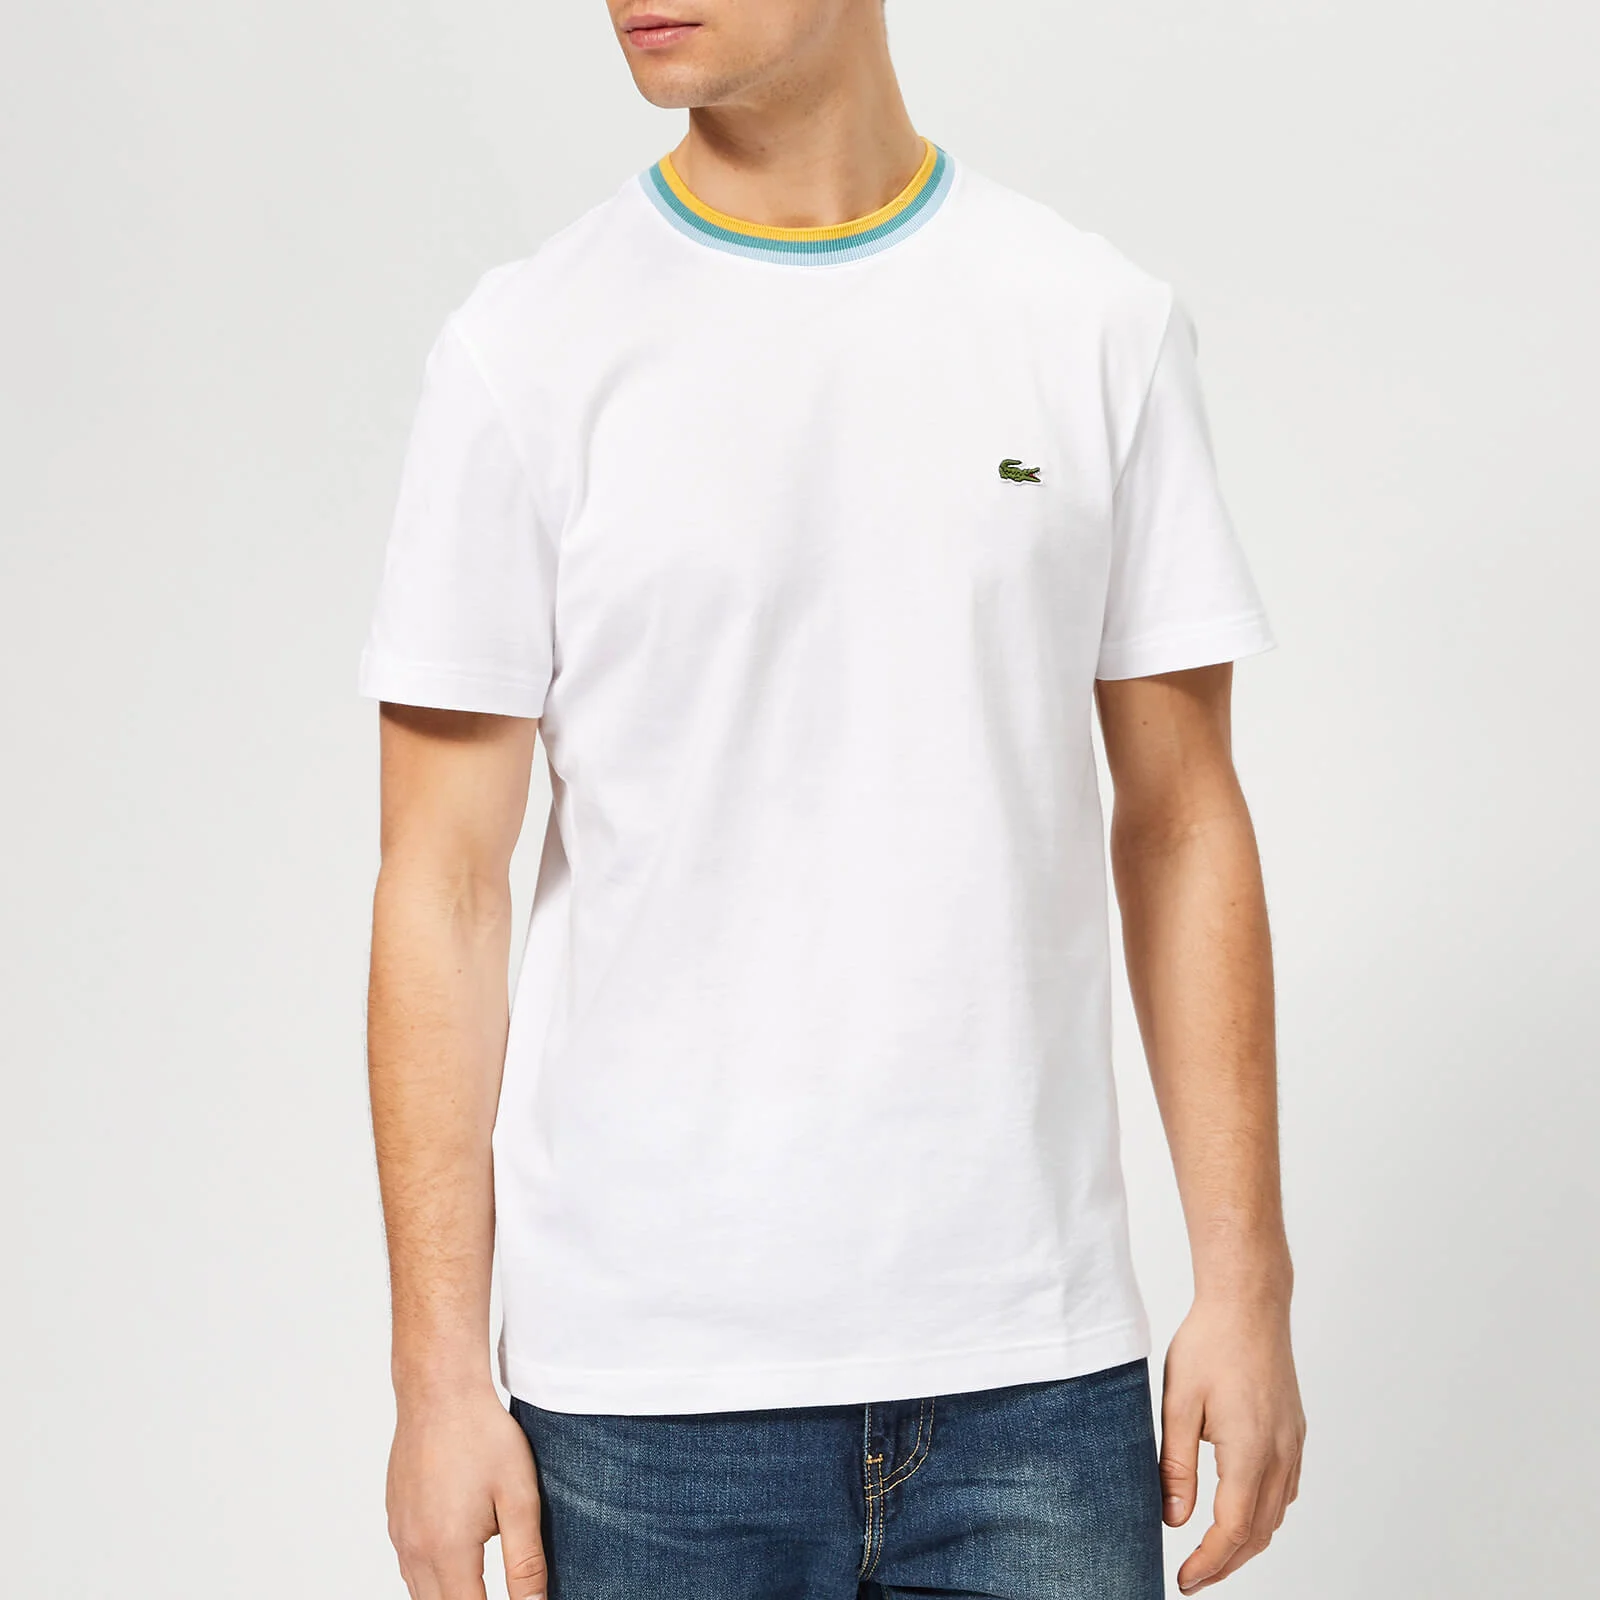 Lacoste Men's Contrast Collar T-Shirt - White Image 1